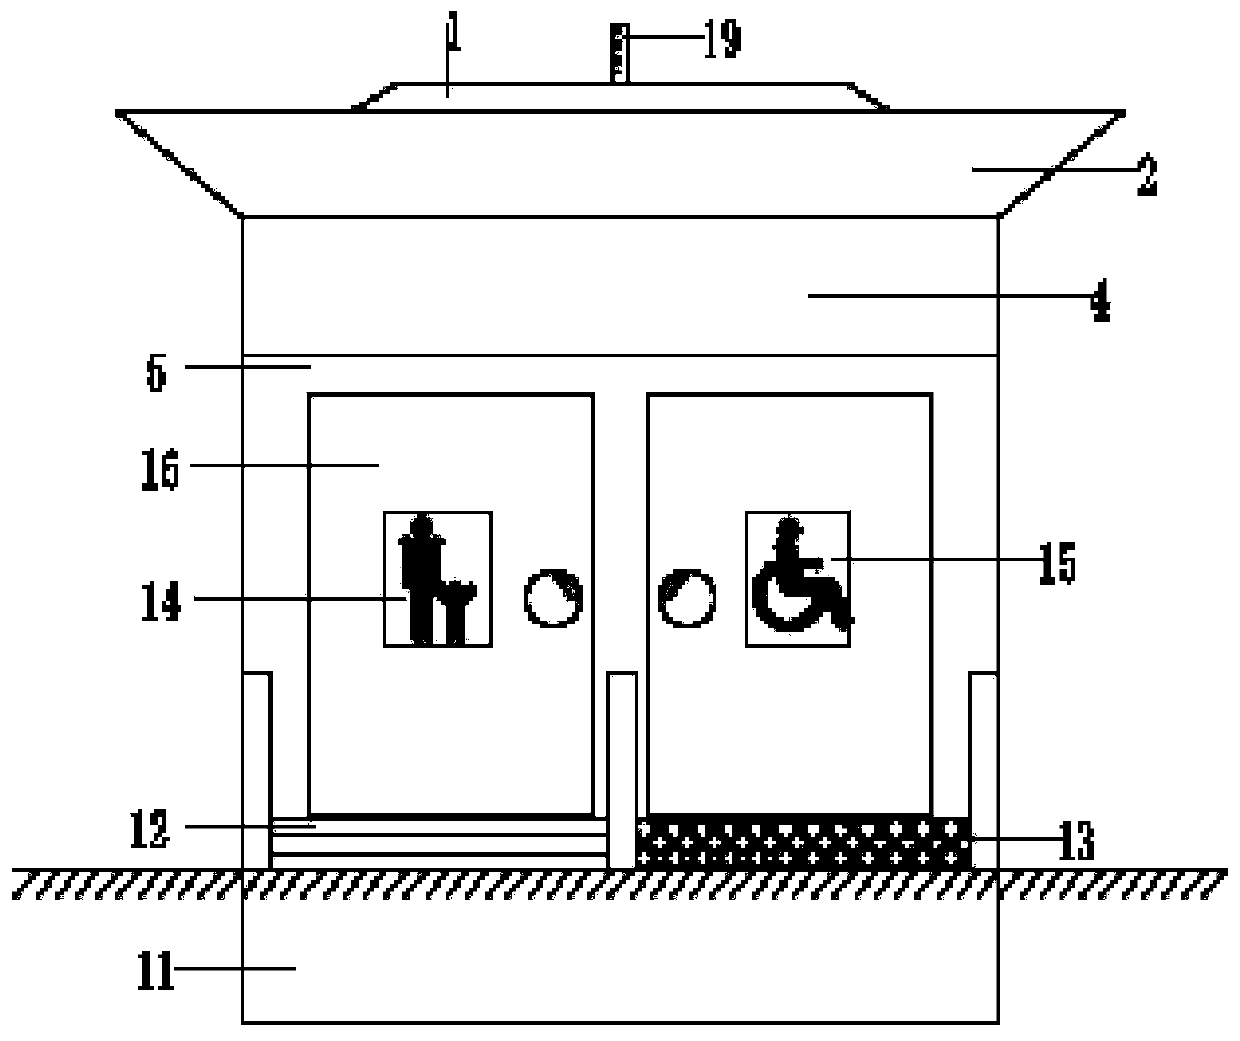 An outdoor men's public restroom structure